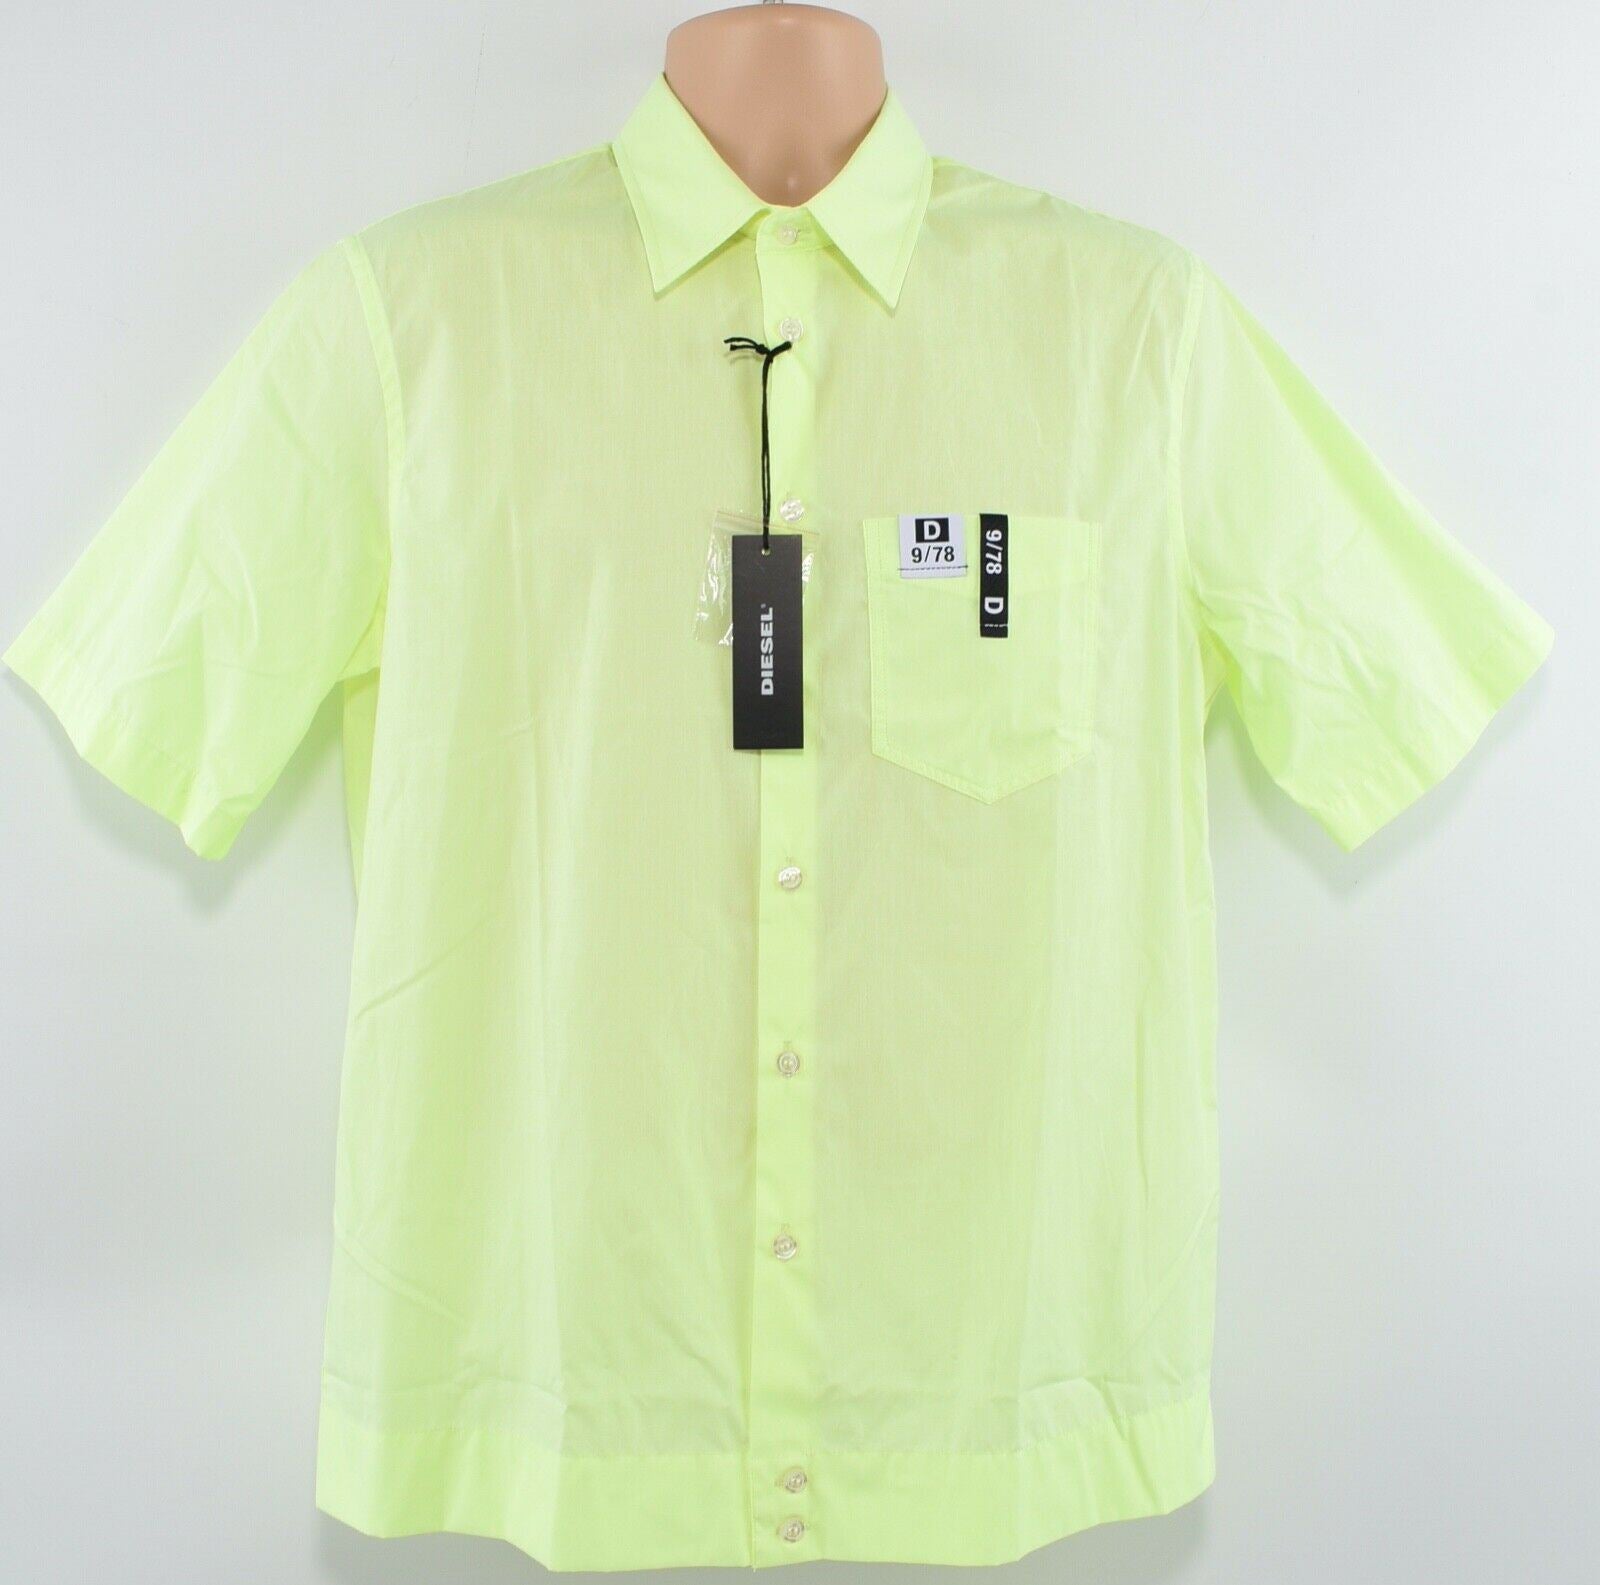 DIESEL Men's S-FRY Short Sleeve Shirt, Fluo Green, size M